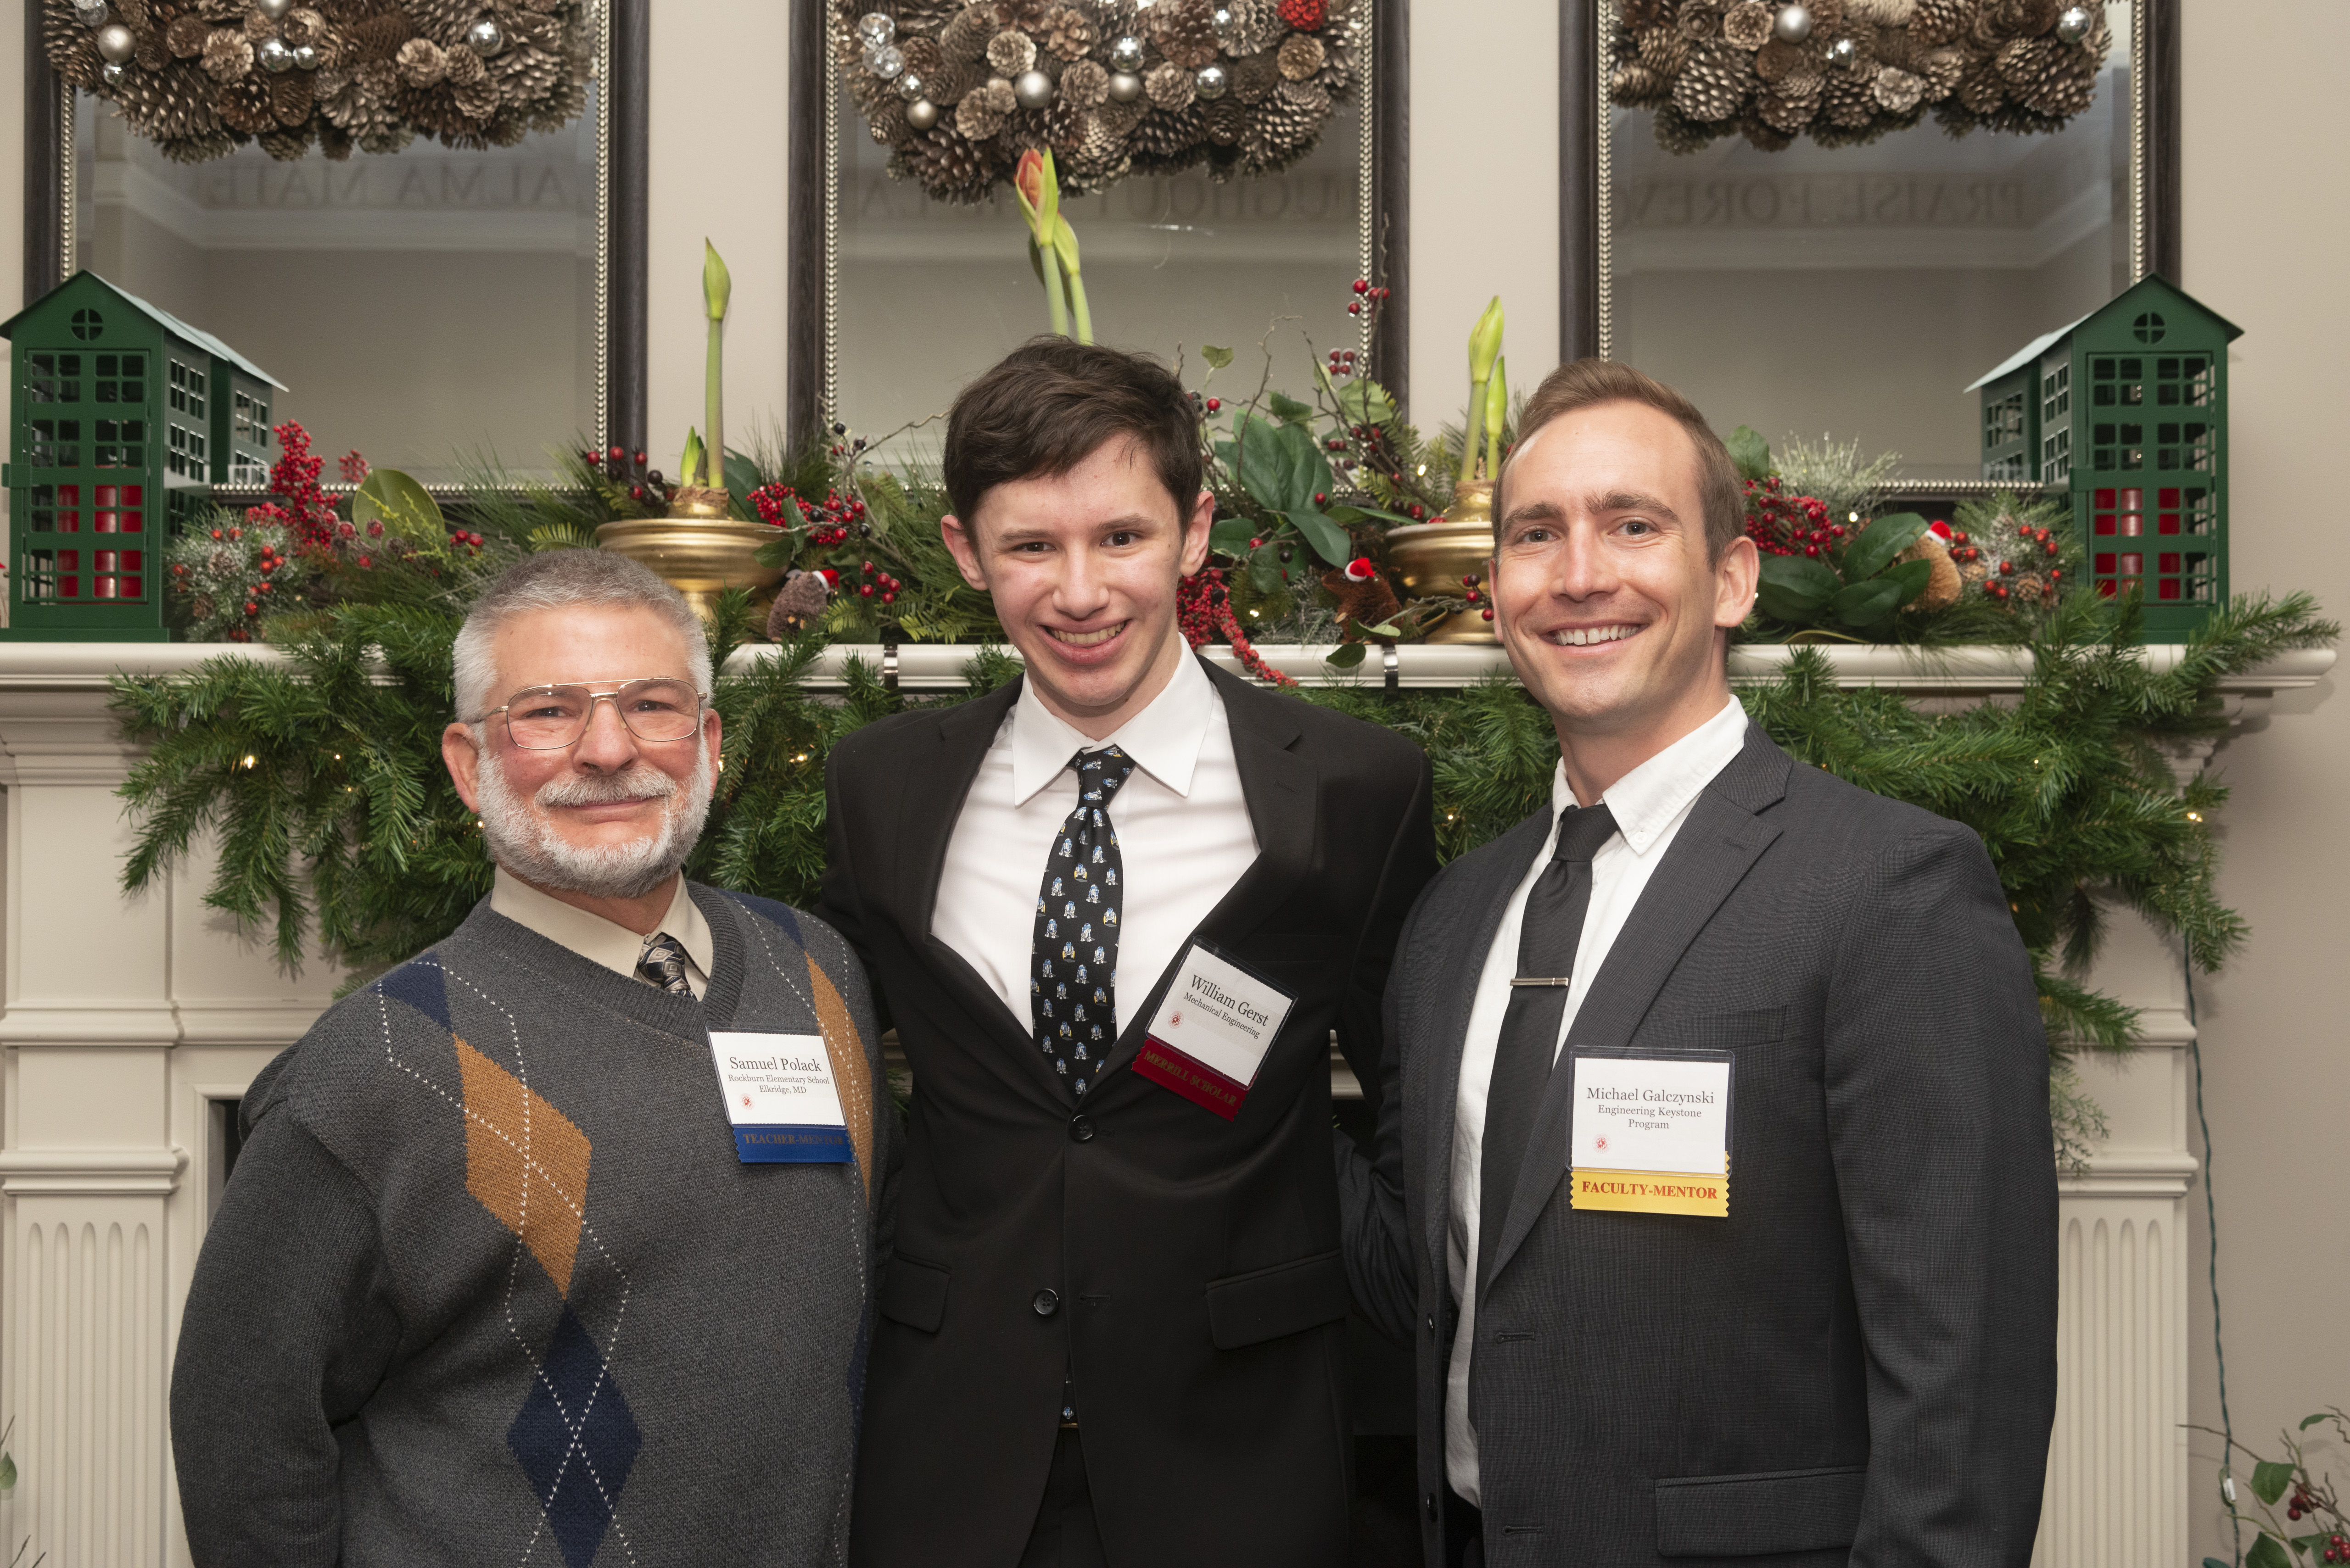 Merrill Scholar William Gerst with mentors Samuel Polack and Michael Galczynski